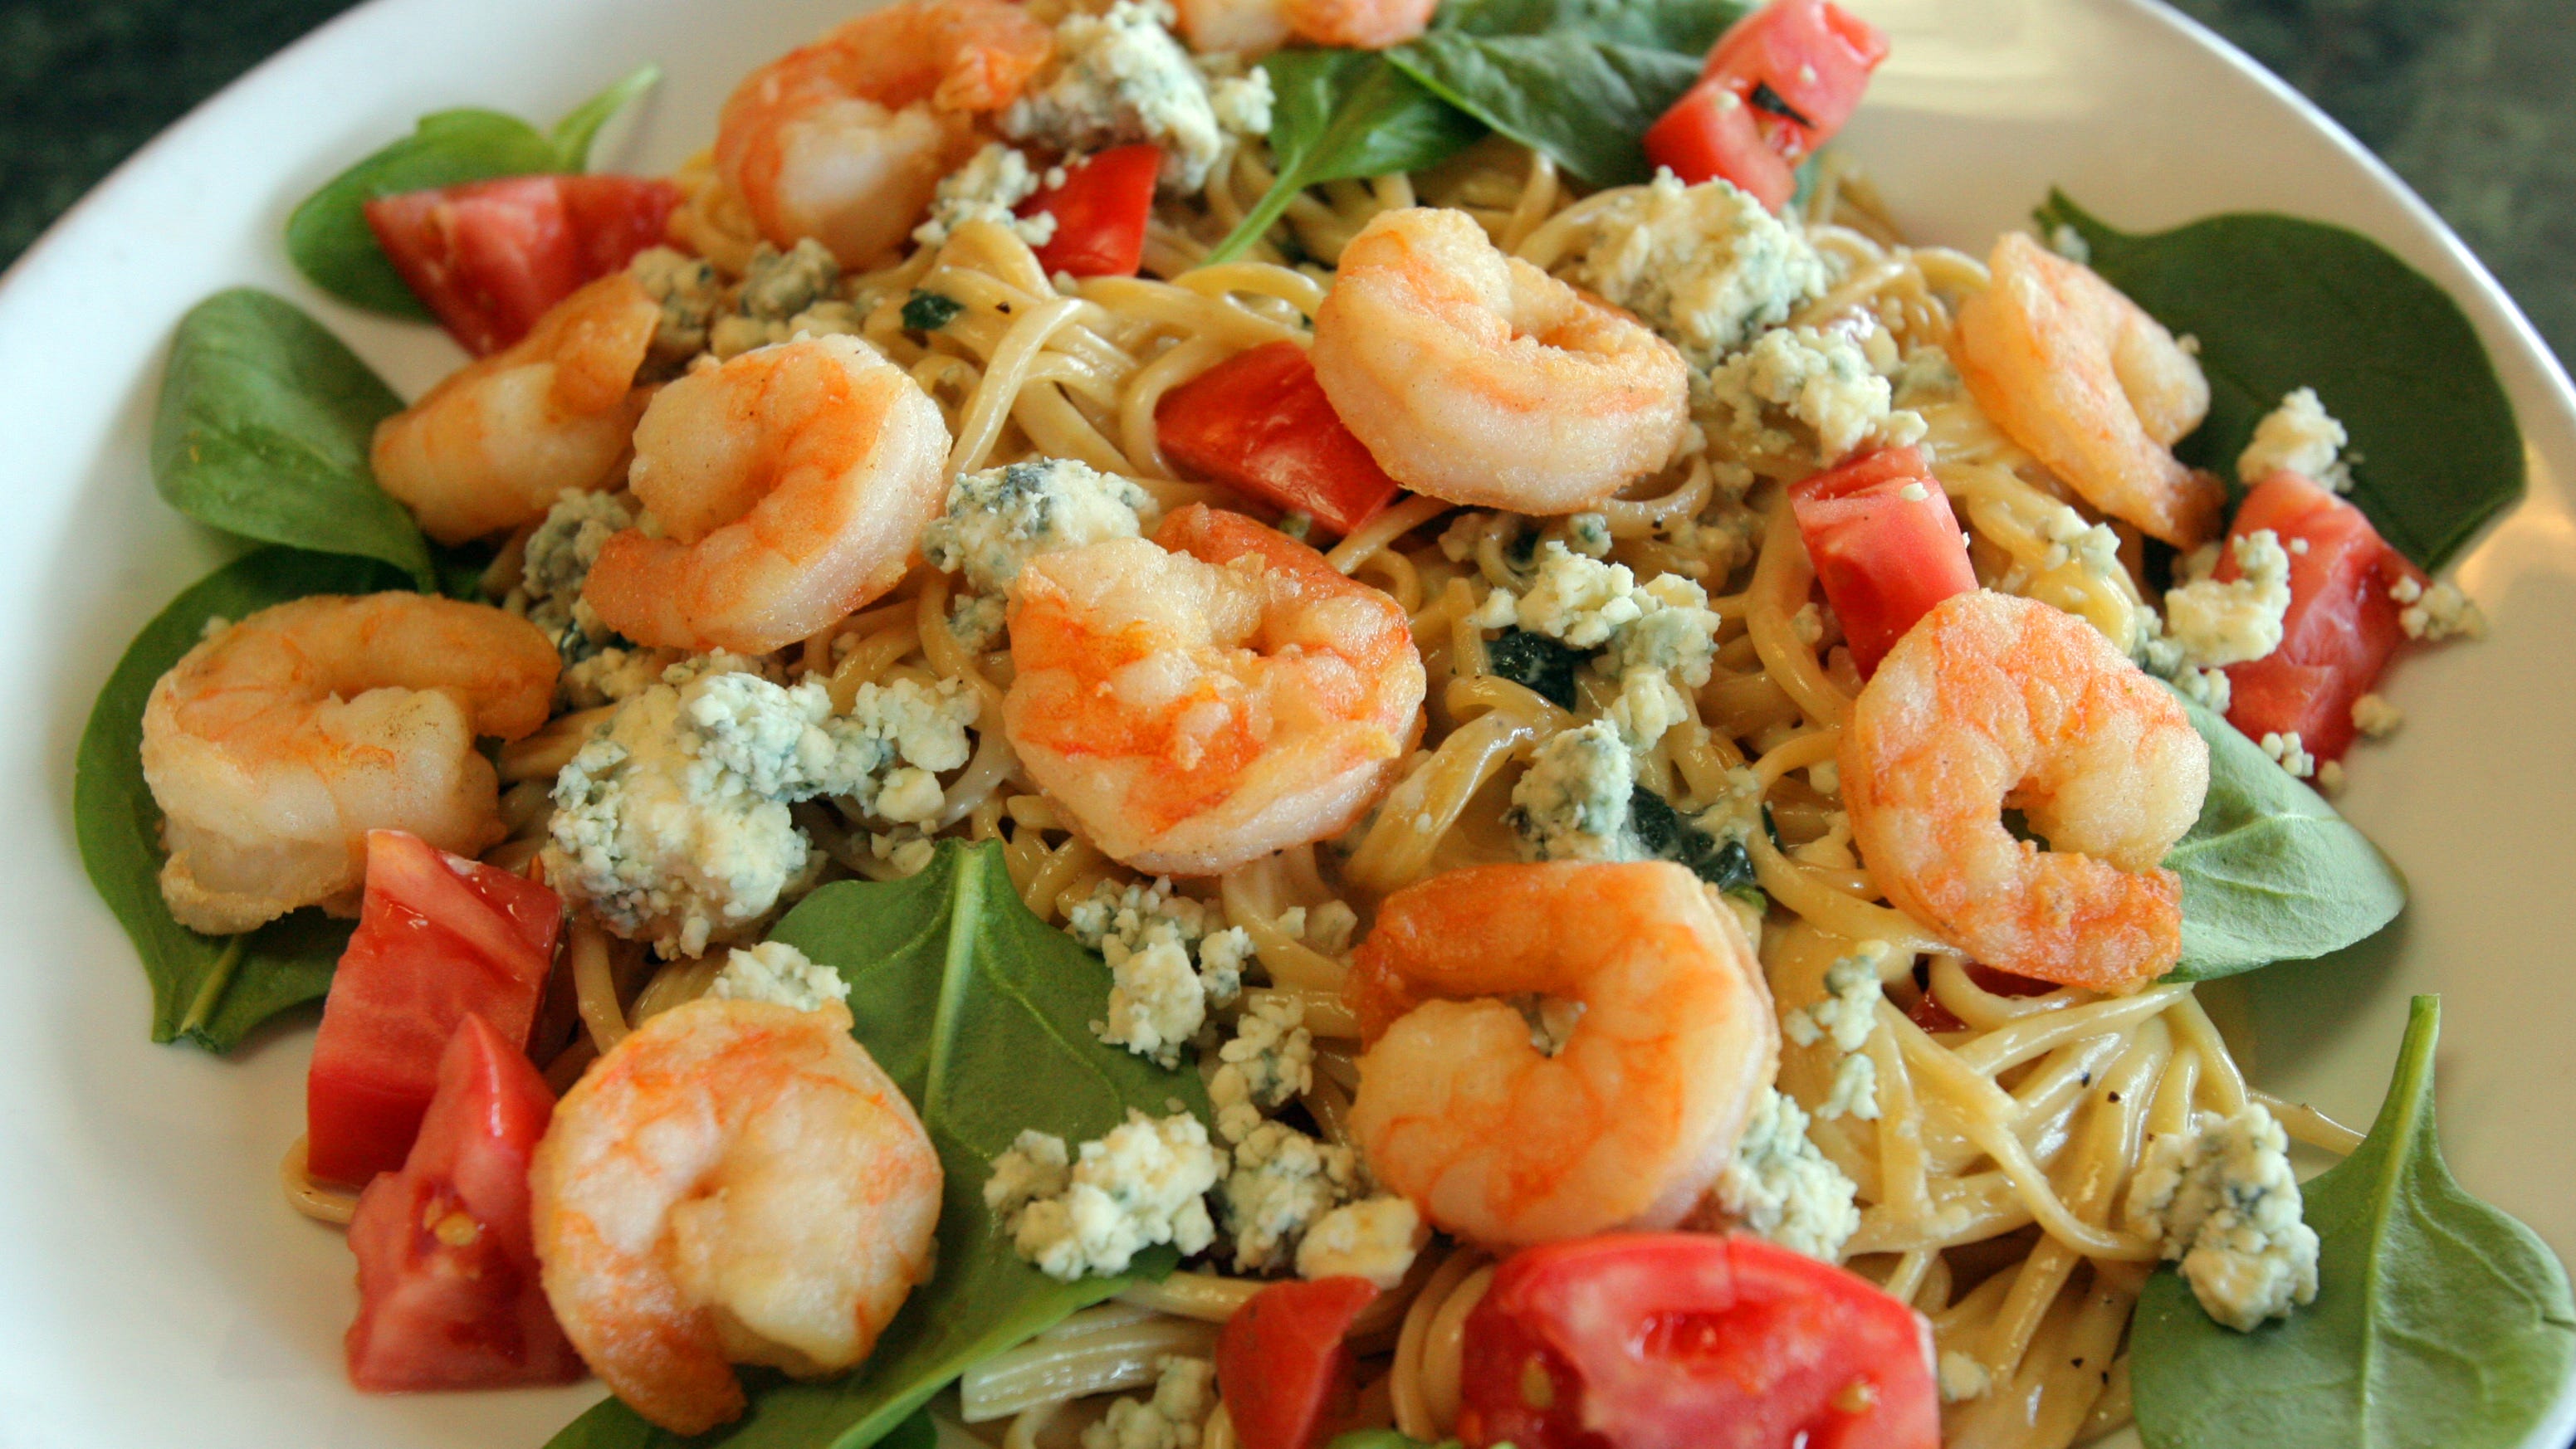 Restaurants best shrimp recipes to make at home